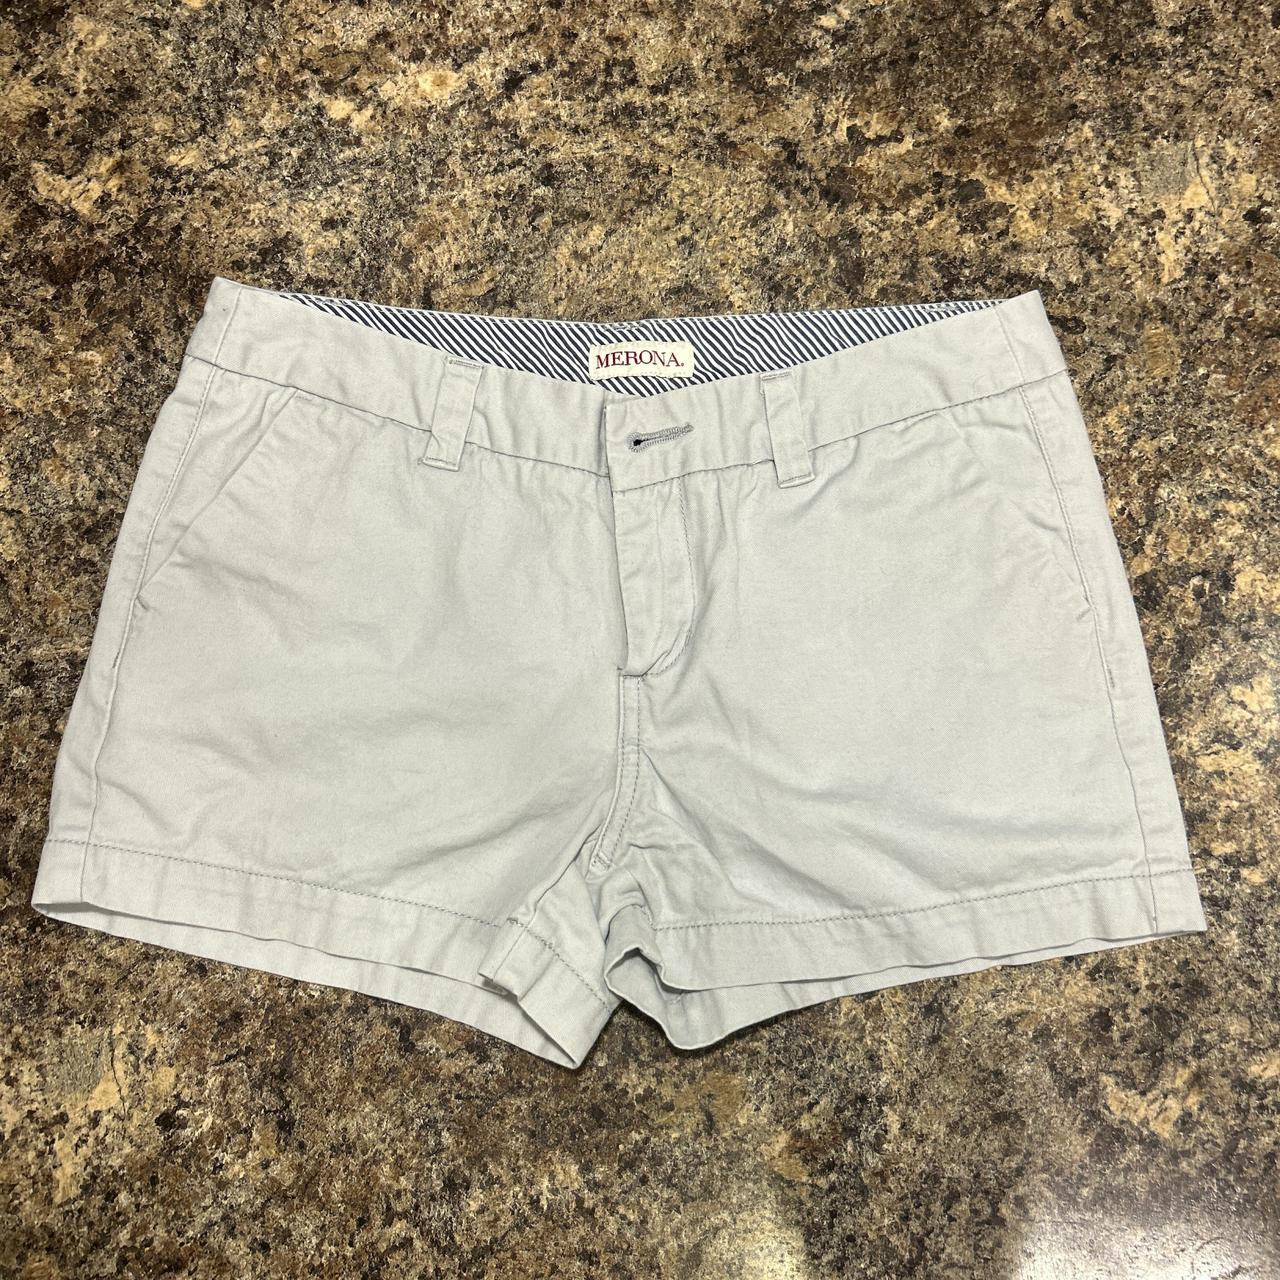 Khaki grey shorts size 2 in good condition. Inseam